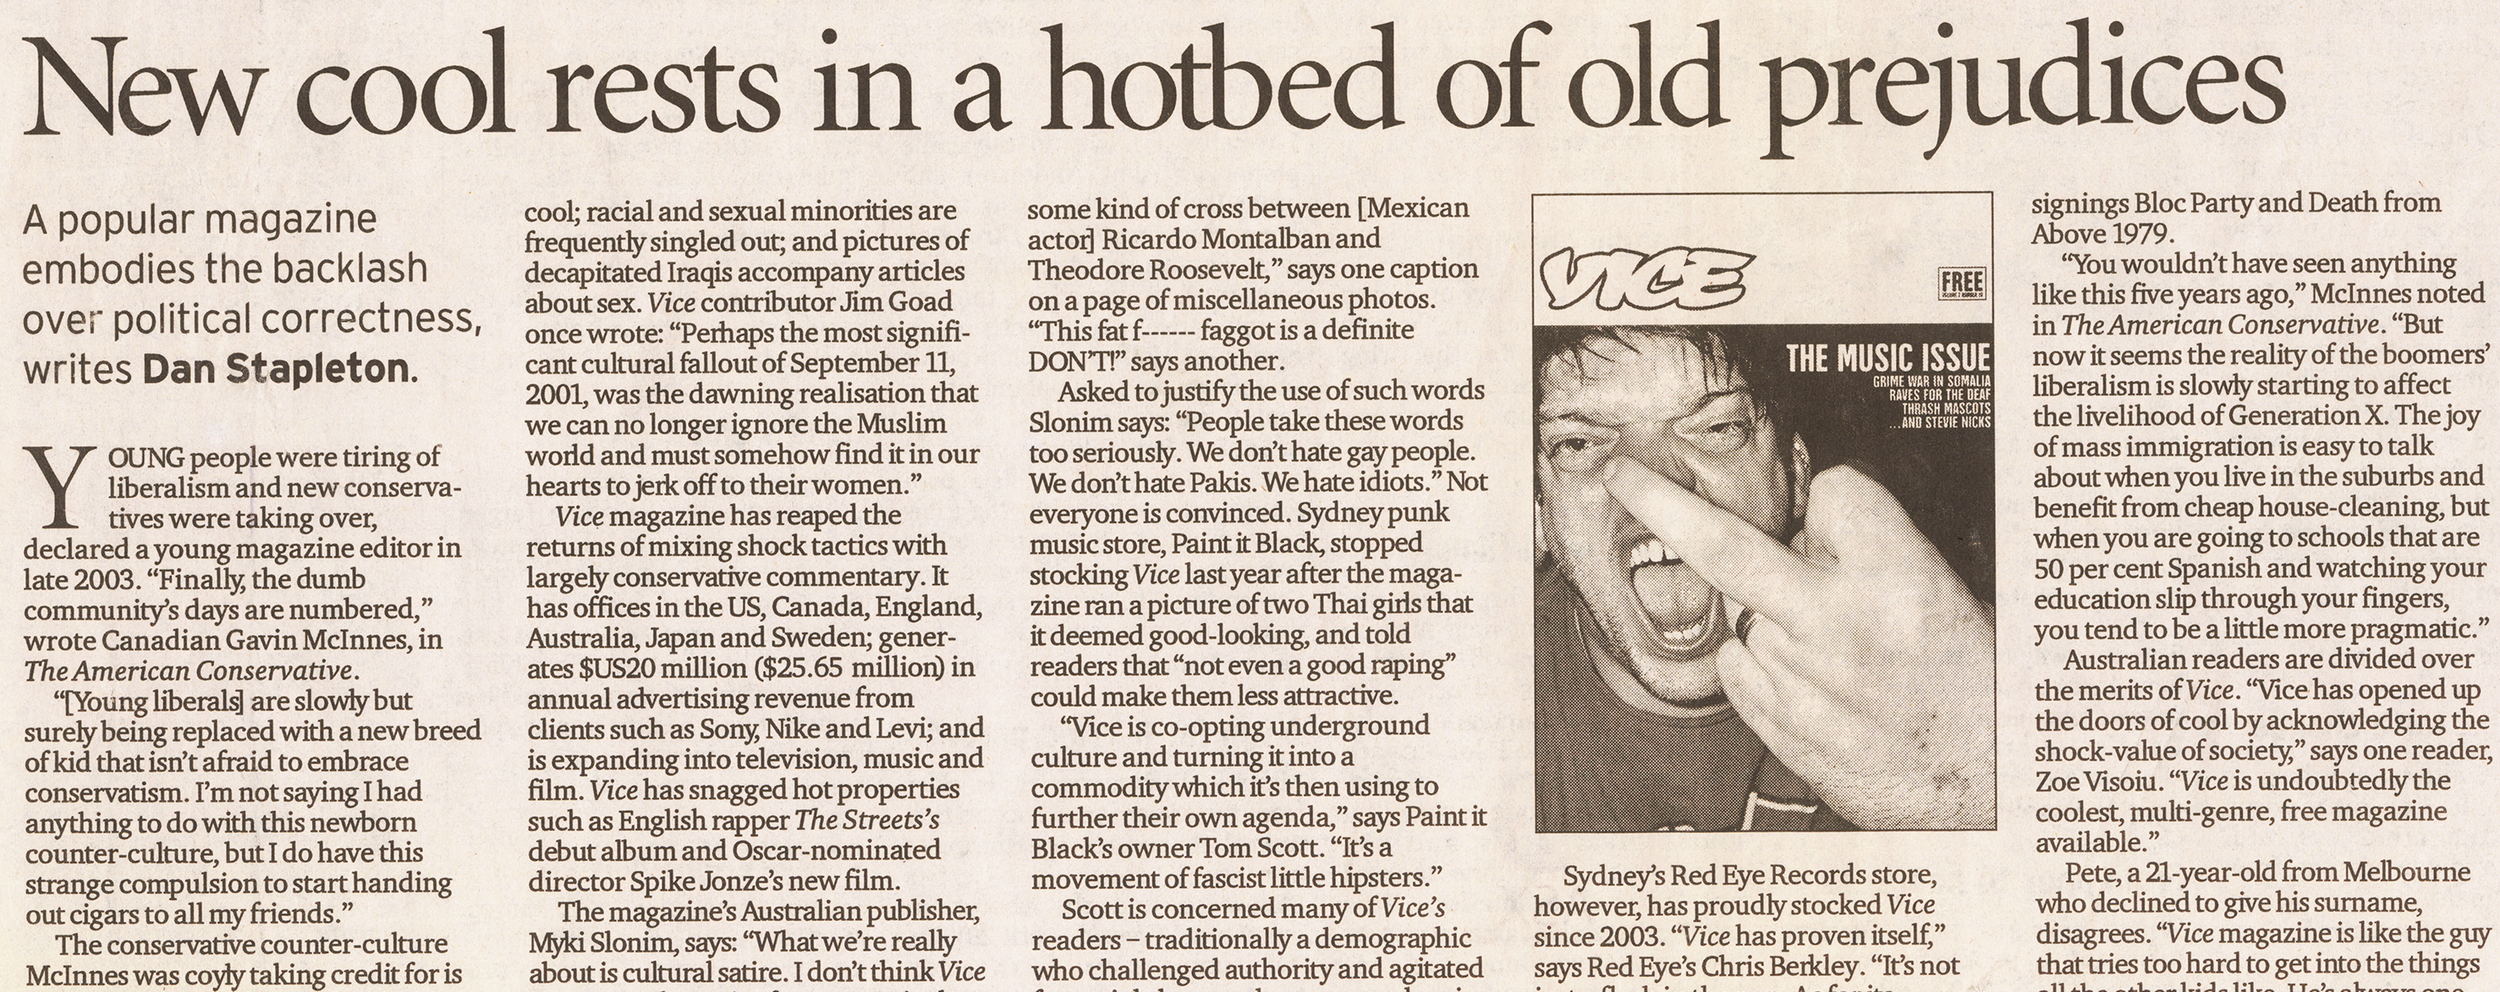 Vice: origins | The Sydney Morning Herald, 2004